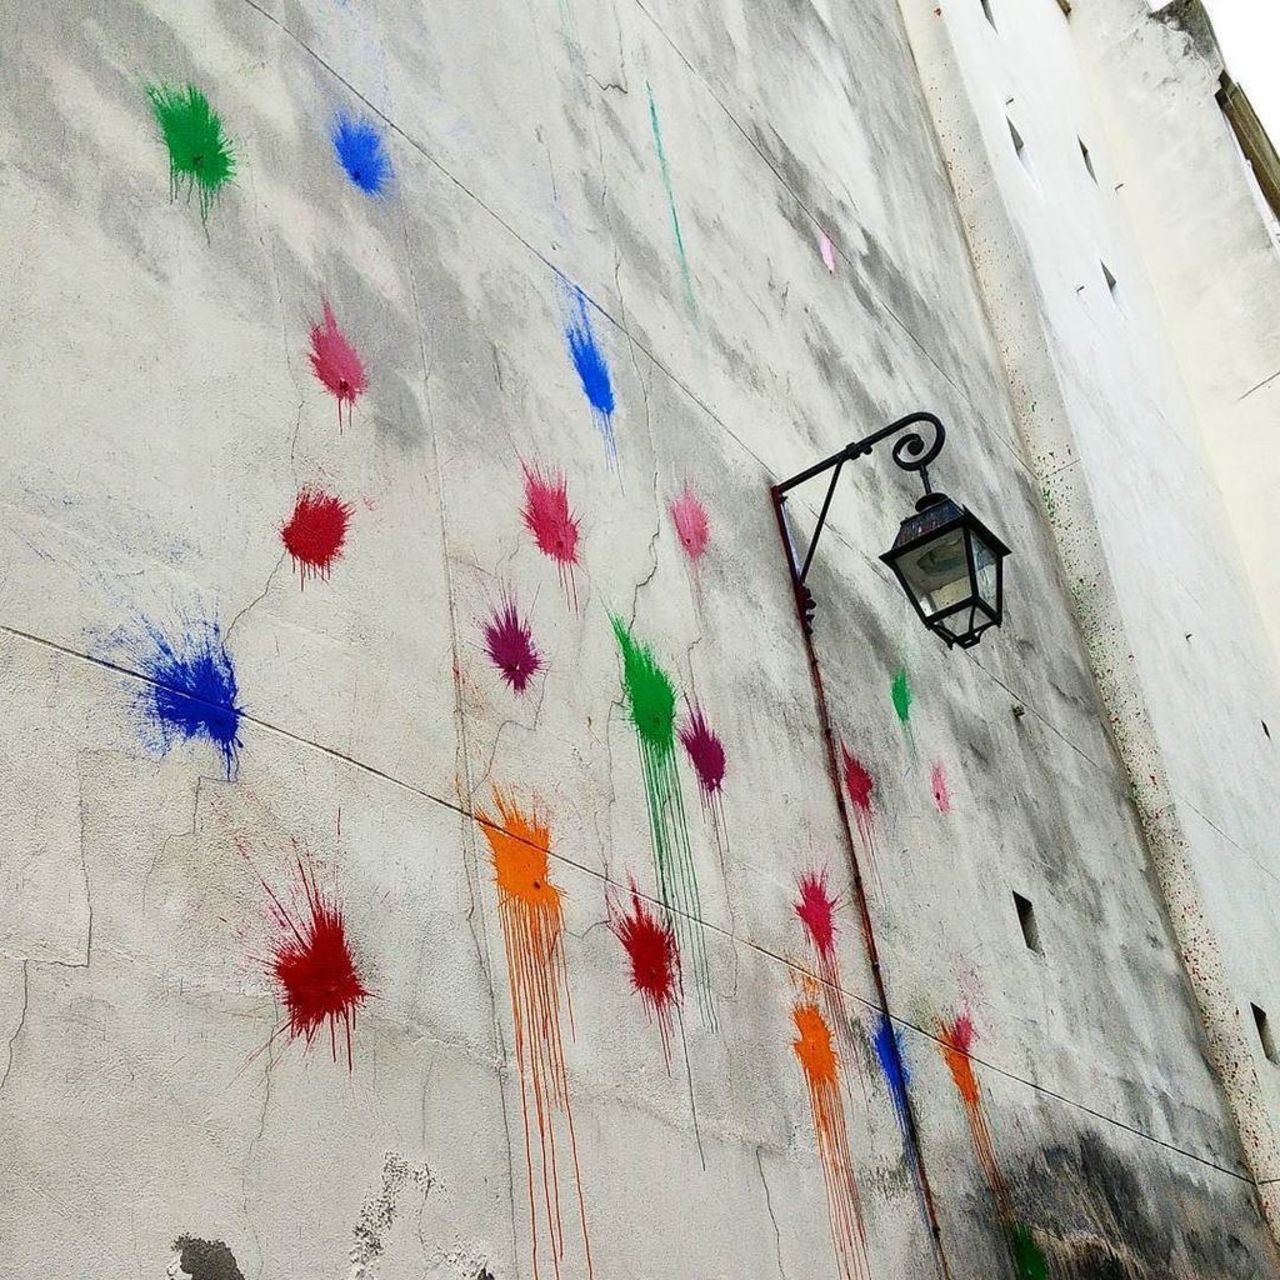 RT @StArtEverywhere: Color attack !! #streetart #streetartparis #parisstreetart #parisgraffiti #graffiti #graffitiart #urbanart #sprayar… https://t.co/vtBGnyuwXw